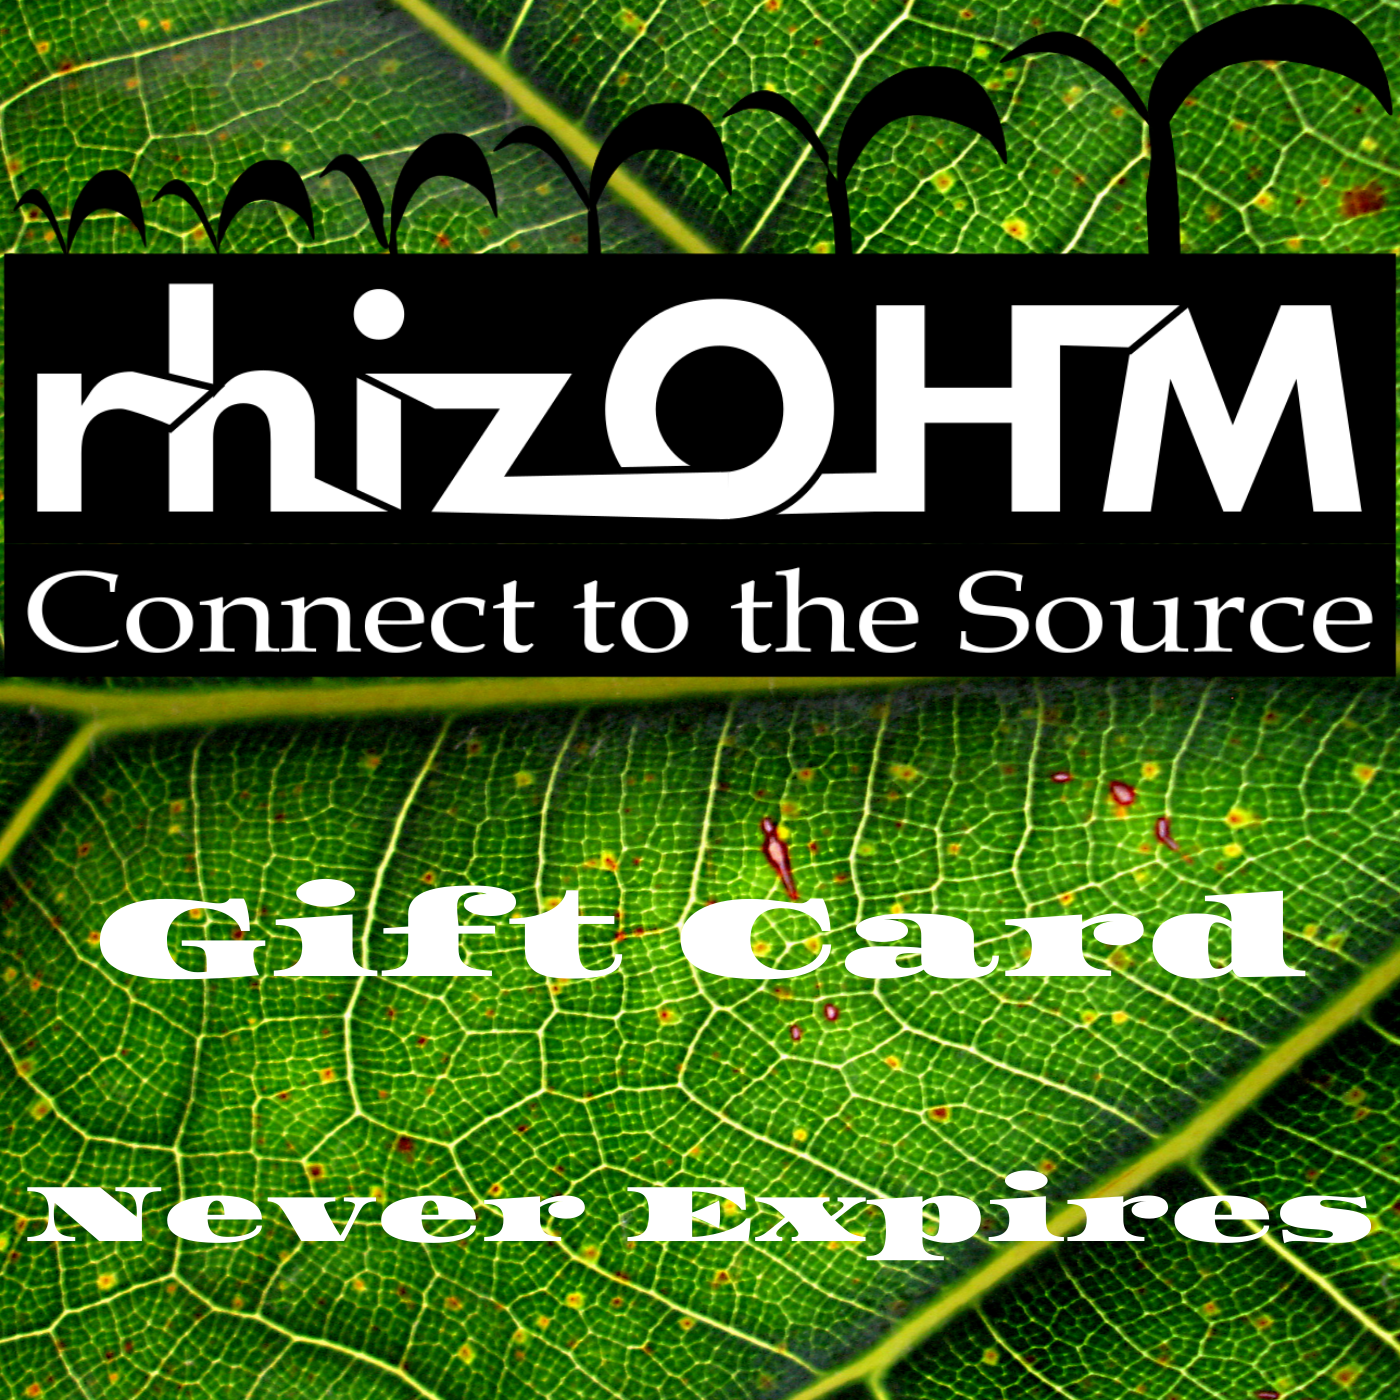 rhizOHM Store Wide Gift card